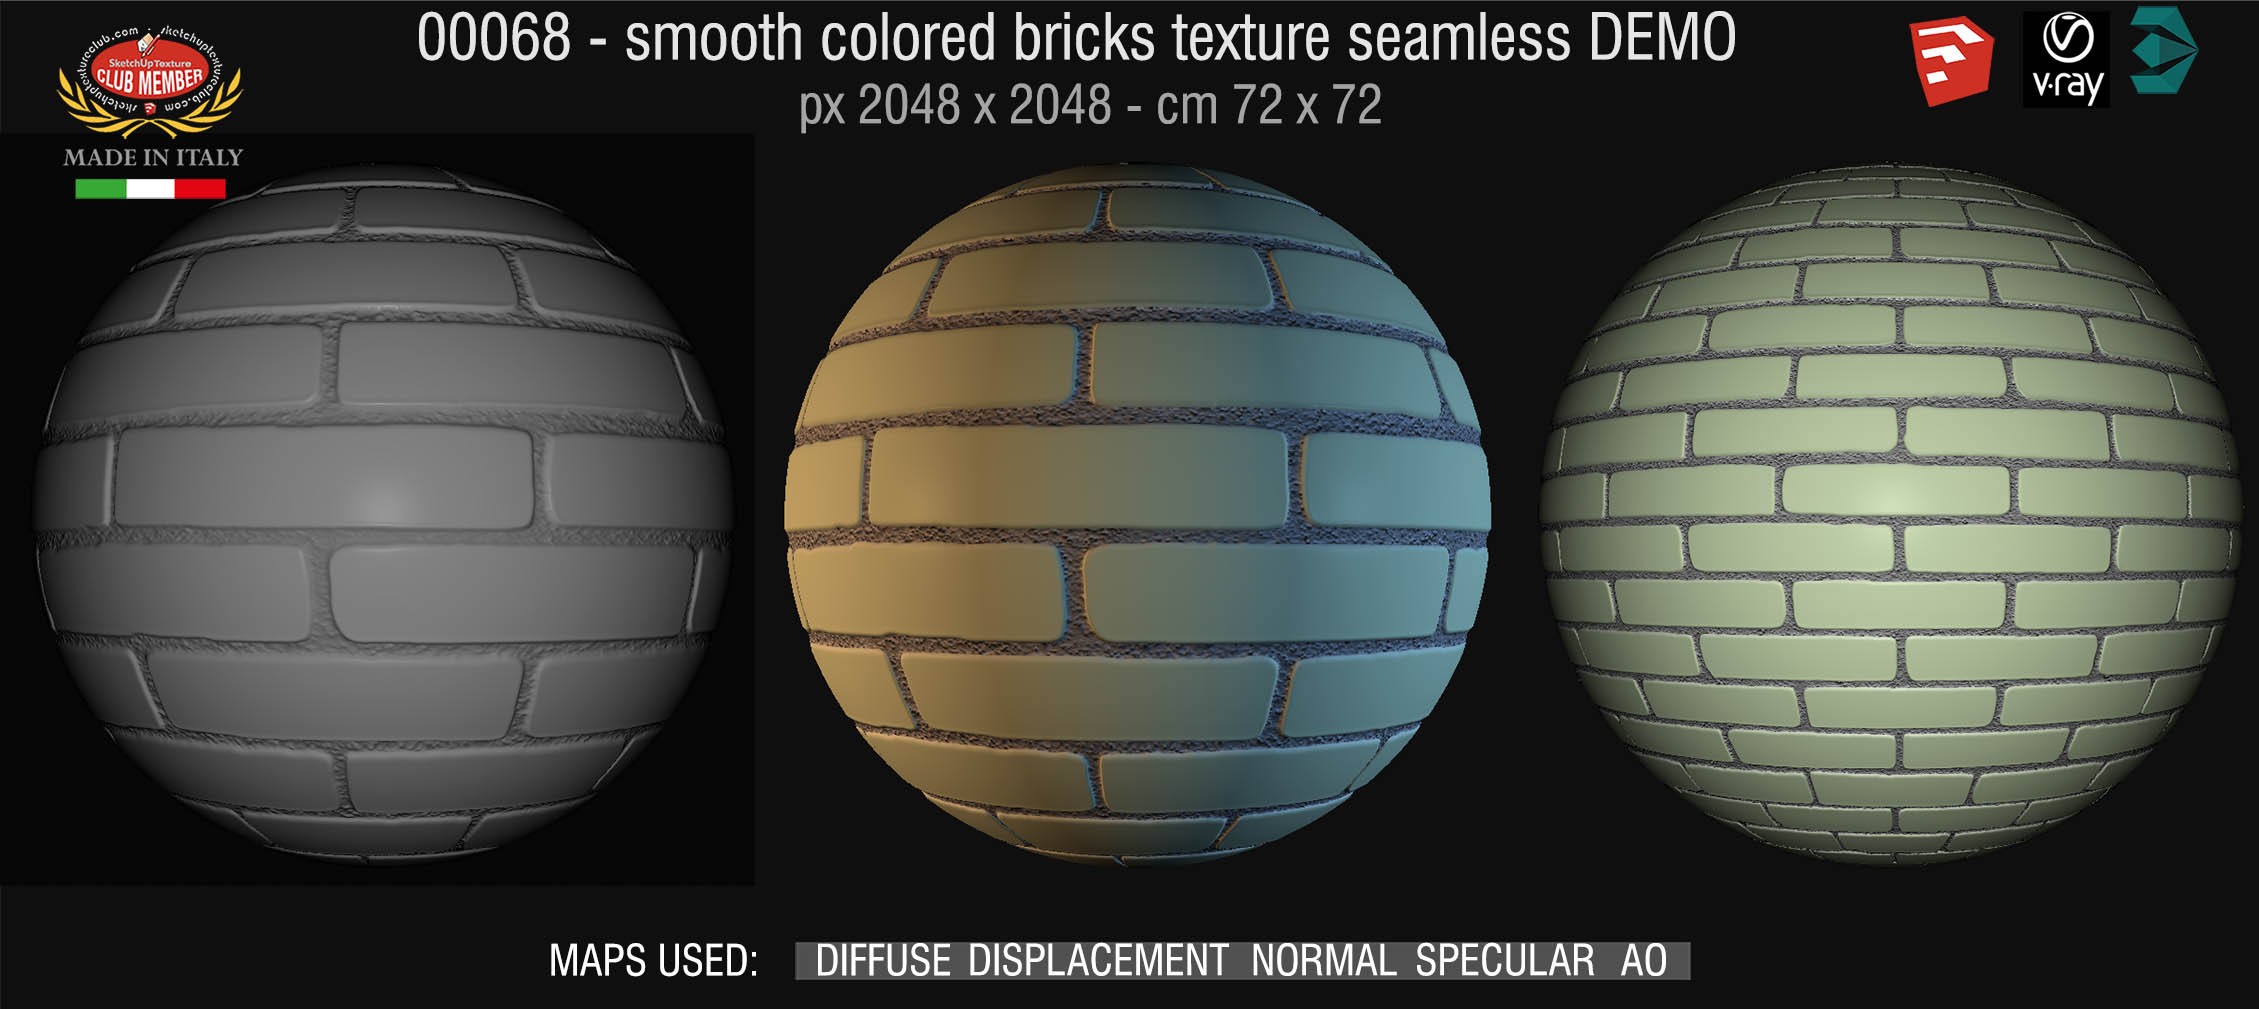 00068 smooth colored bricks texture seamless + maps DEMO